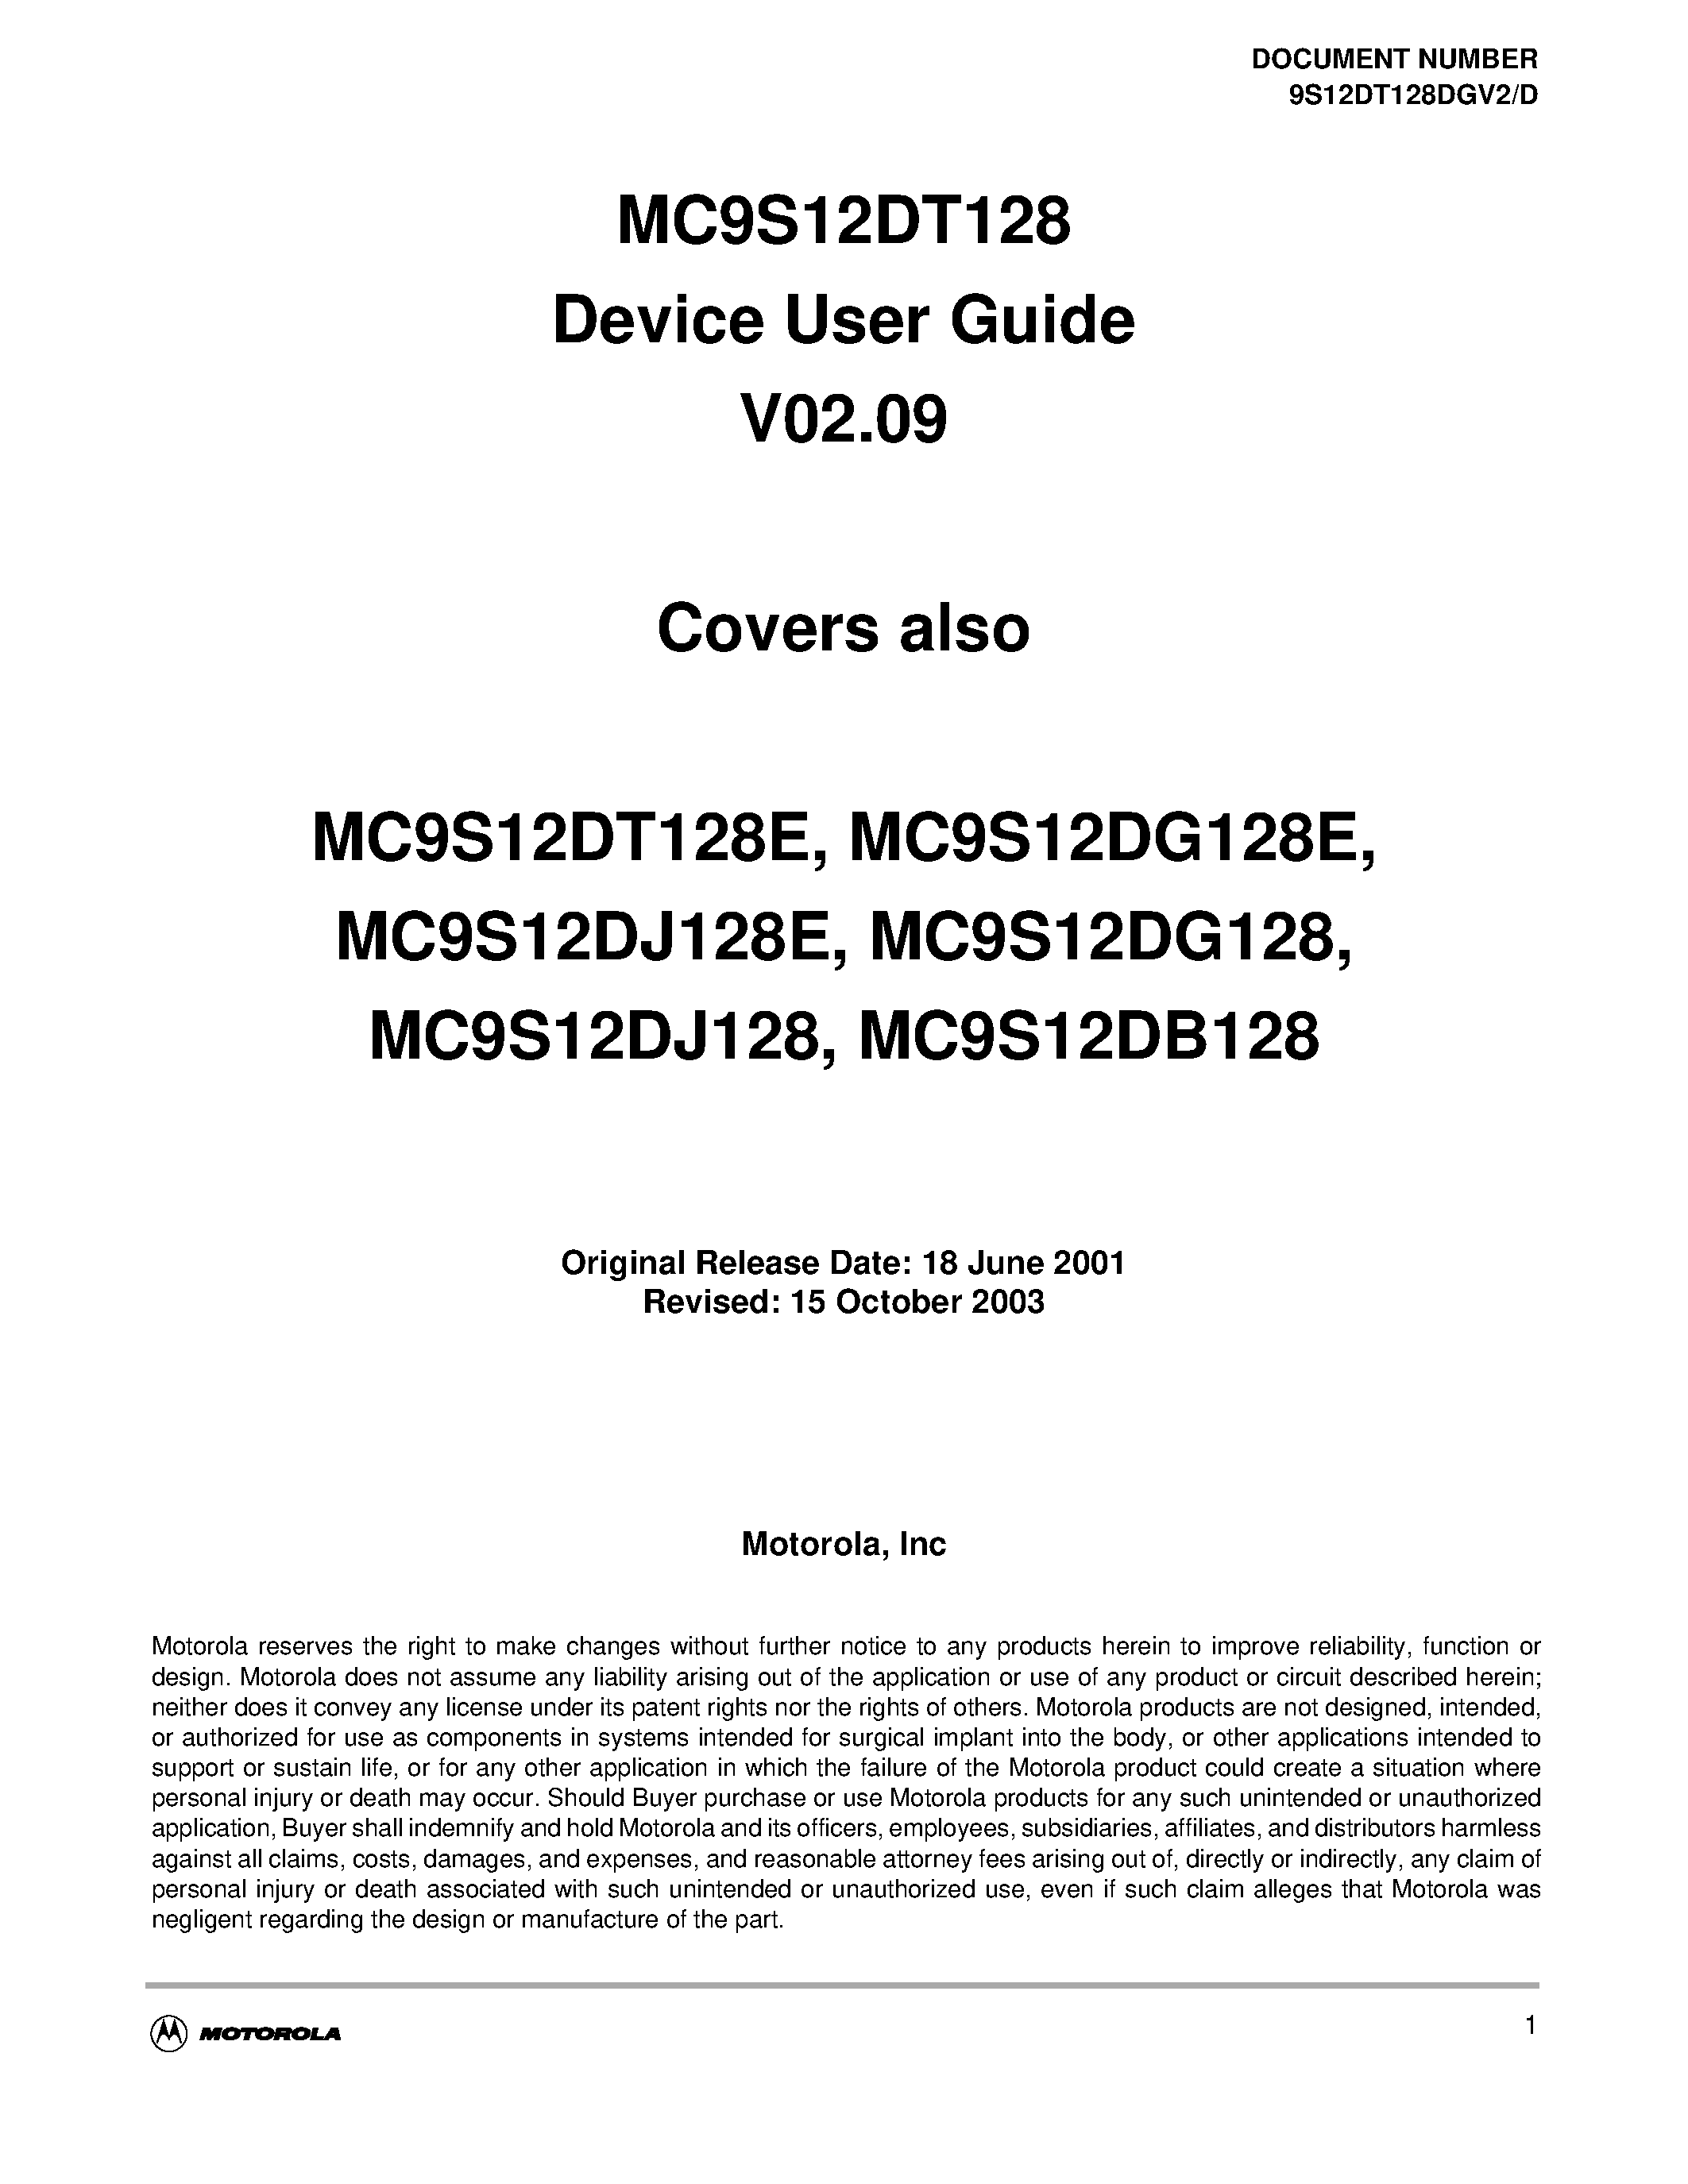 Даташит S12EETS2KV1D - MC9S12DT128 Device User Guide V02.09 страница 1